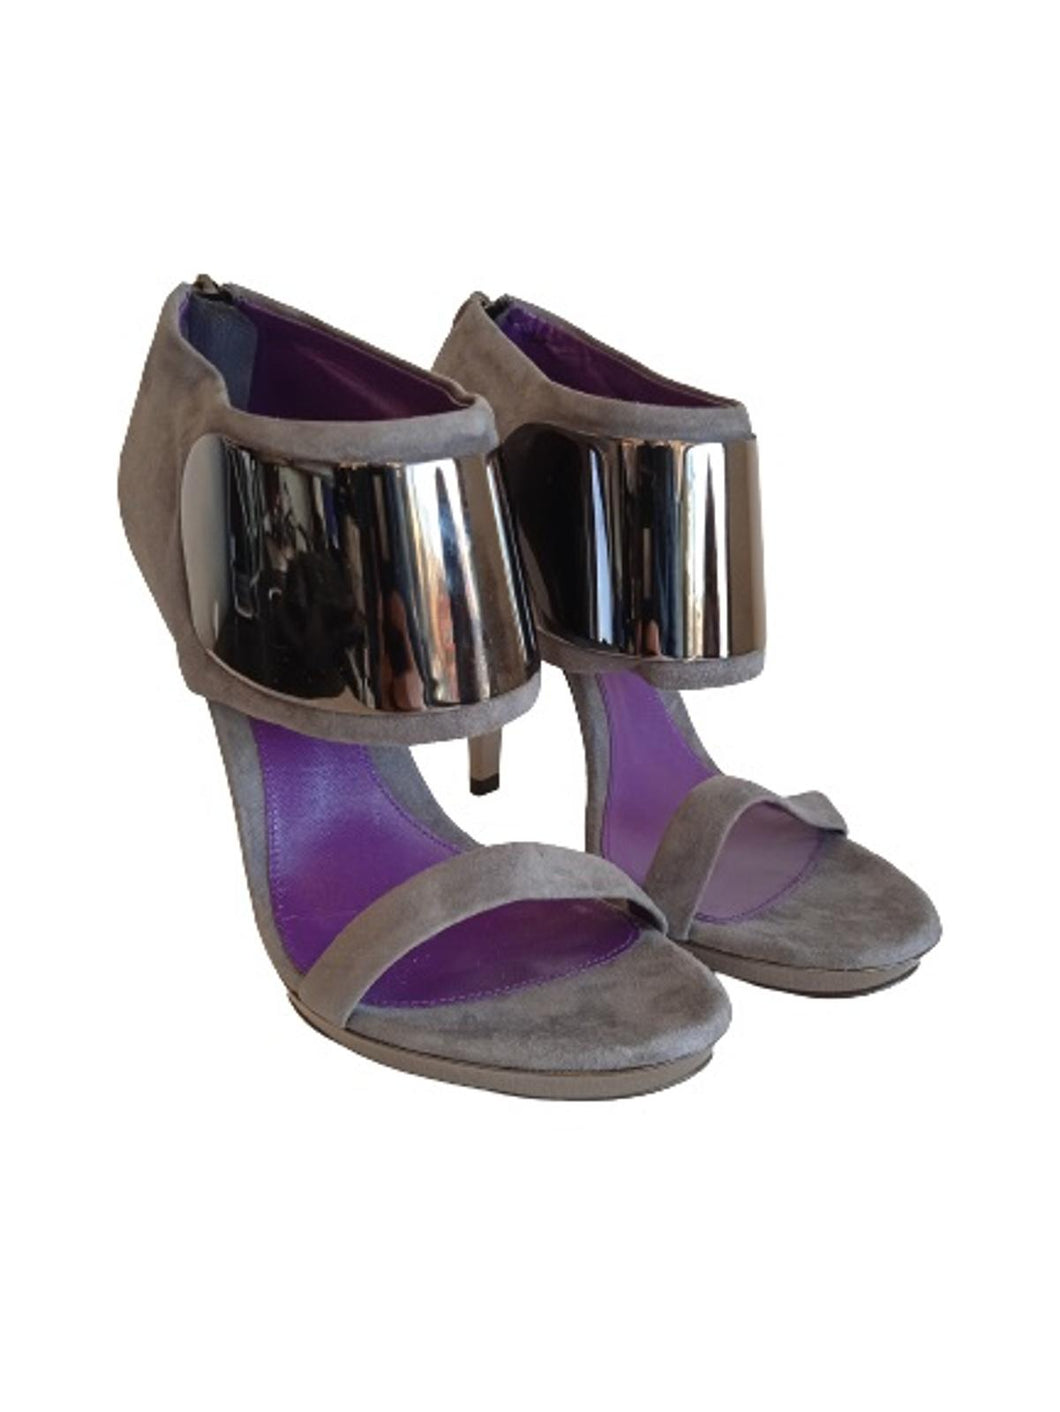 SERGIO ROSSI Ladies Grey & Purple Suede Reflective Detail Court Shoes EU35 UK2